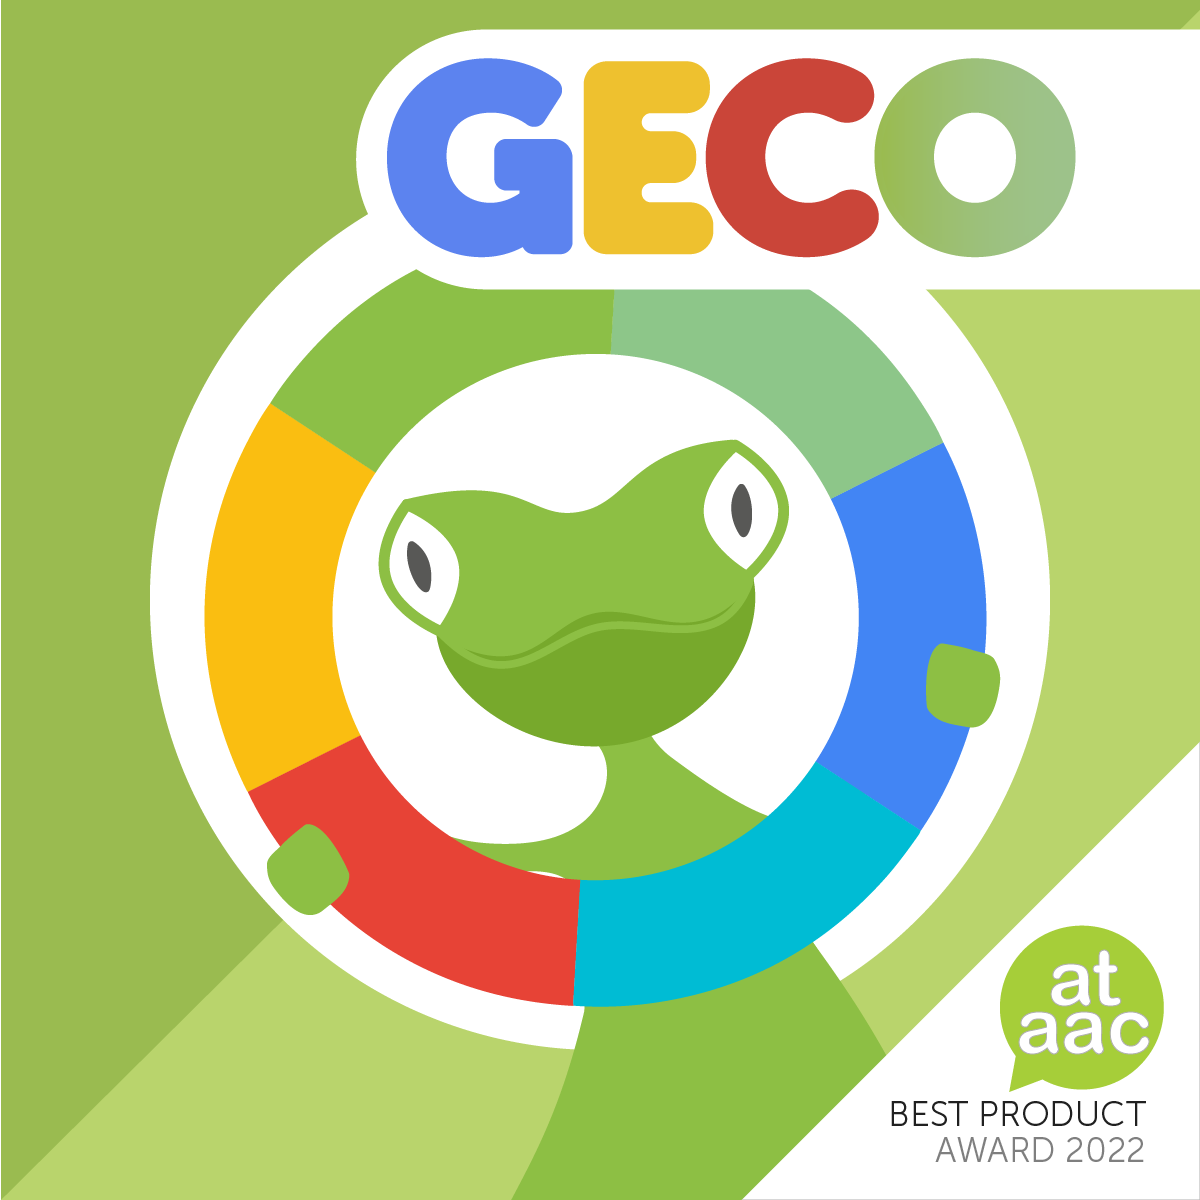 Geco - Ataac Best product Award 2022